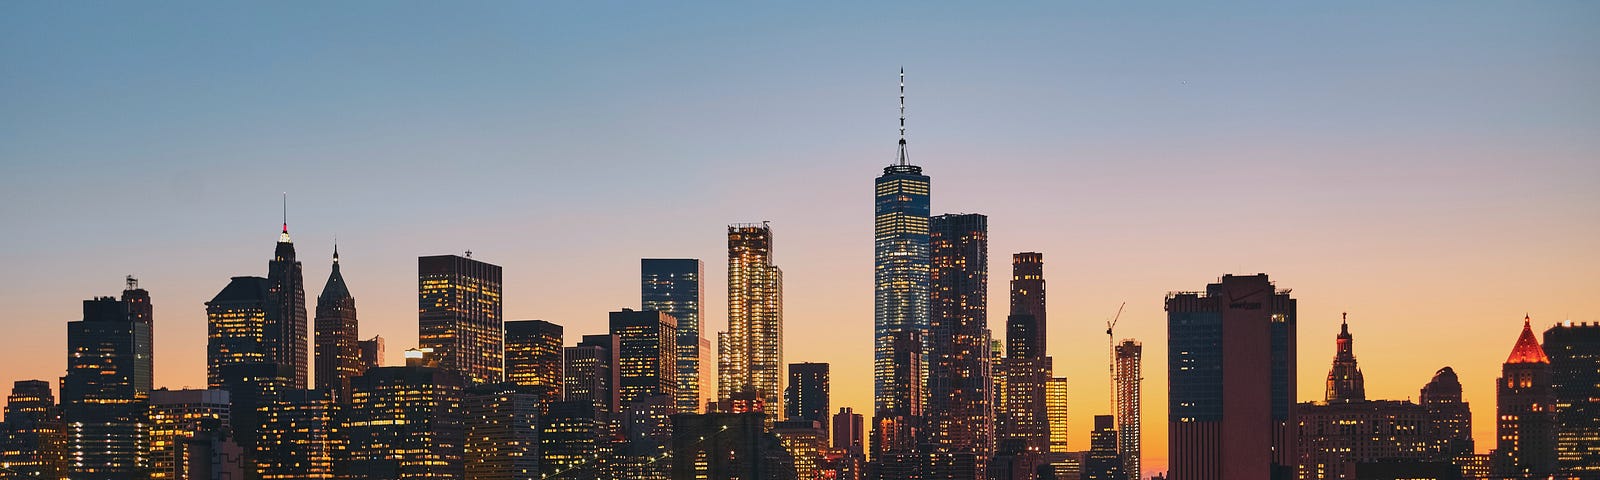 New York’s skyline at dusk.